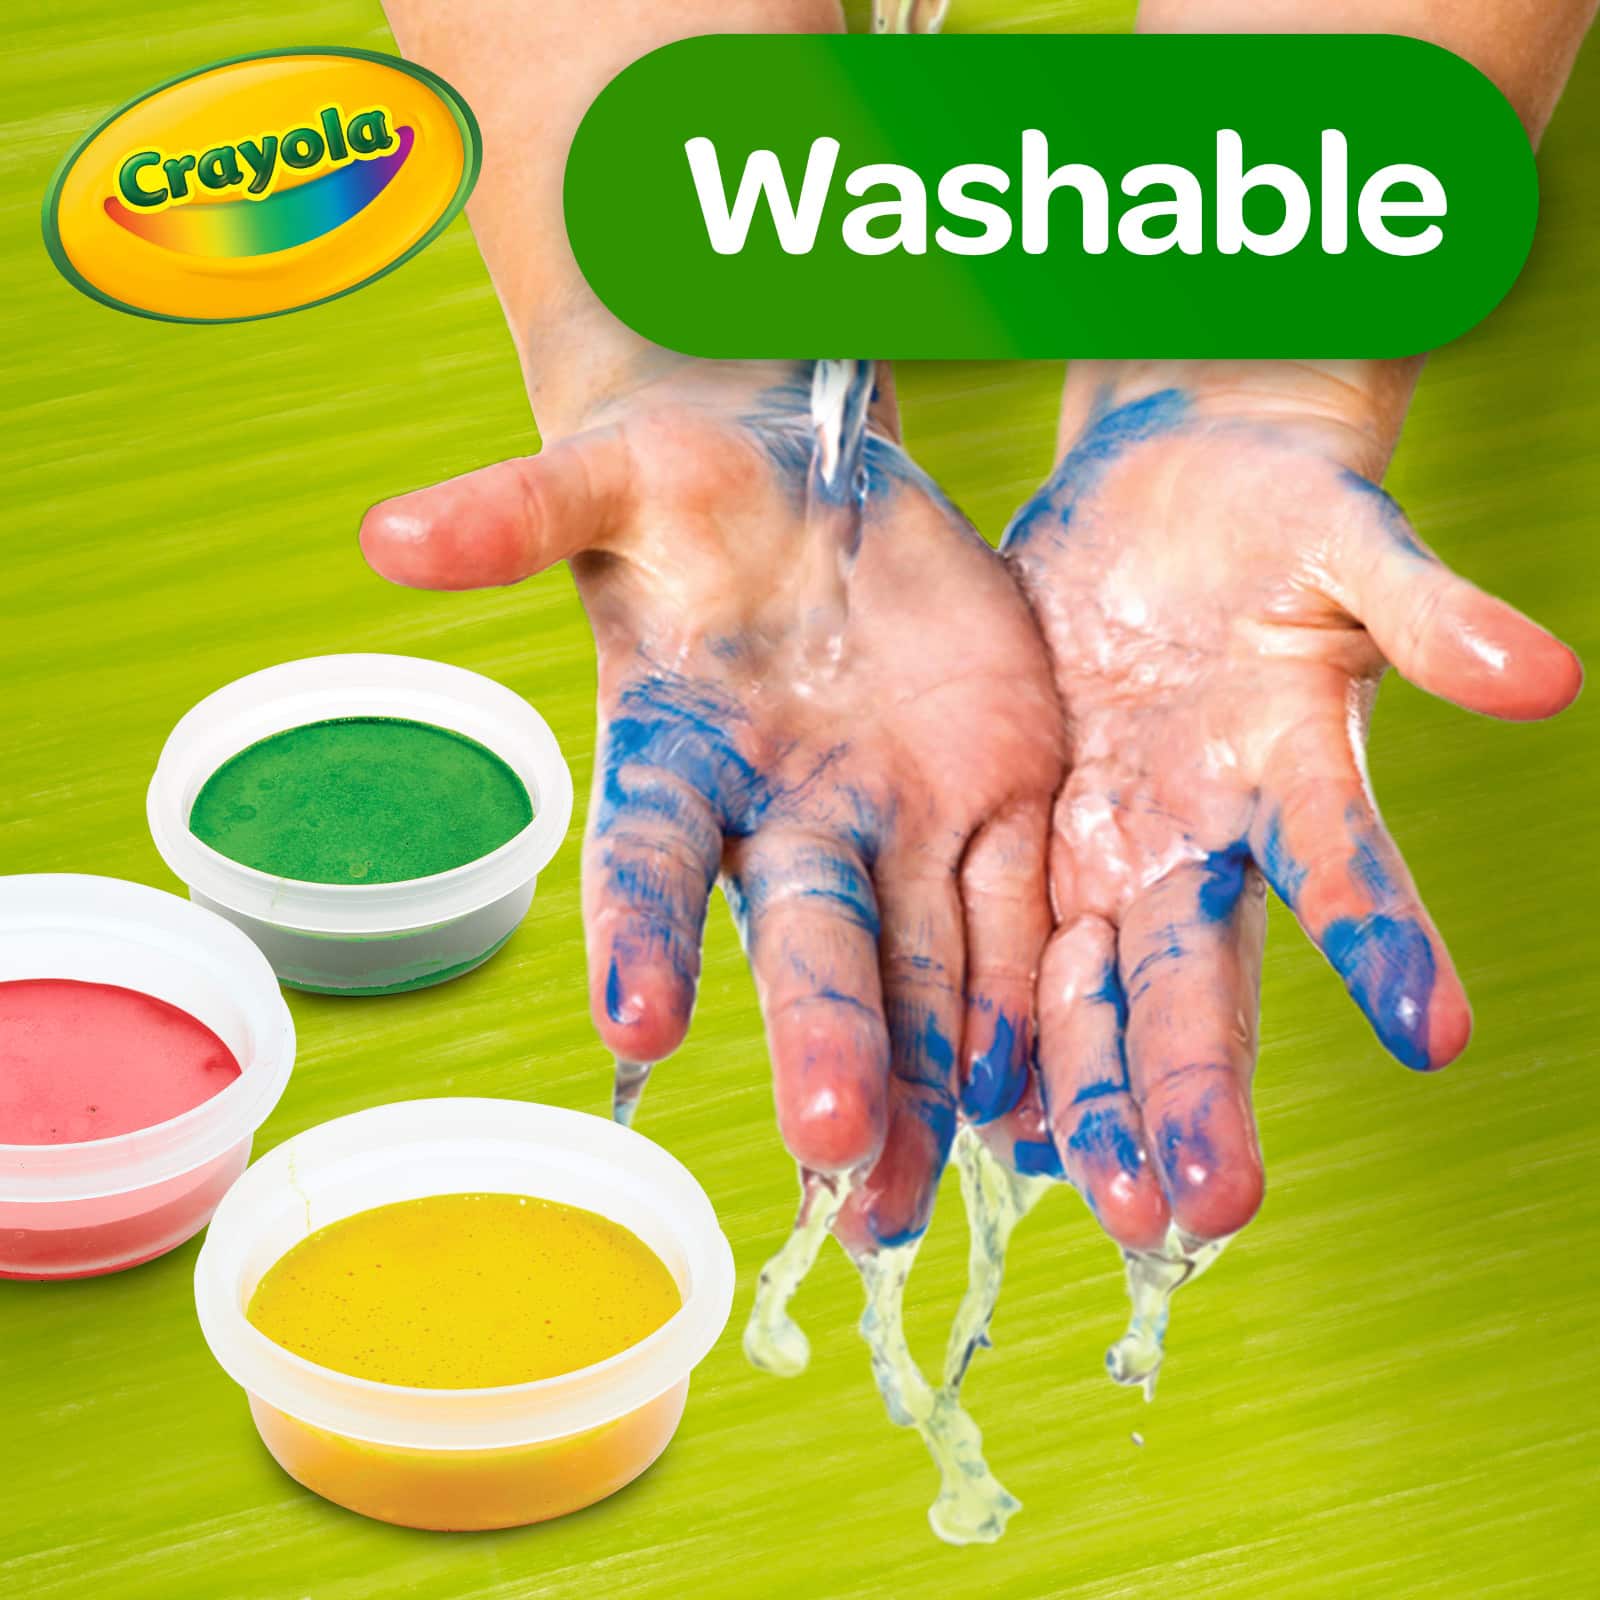 Washable Spill-Proof Paint Kit  Bundle of 5 Packs 